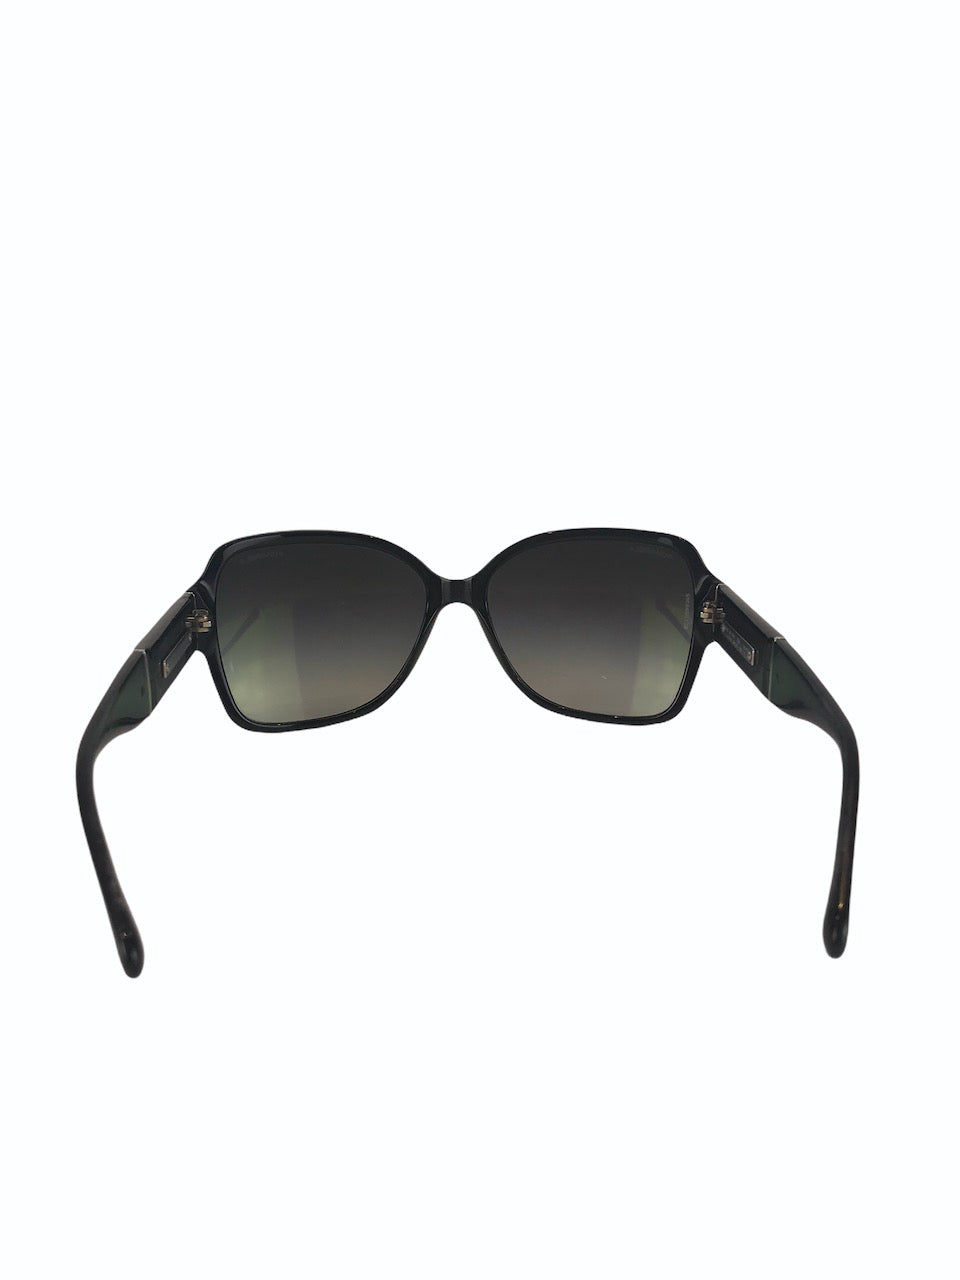 Chanel Black Sunglasses - Siopaella Designer Exchange